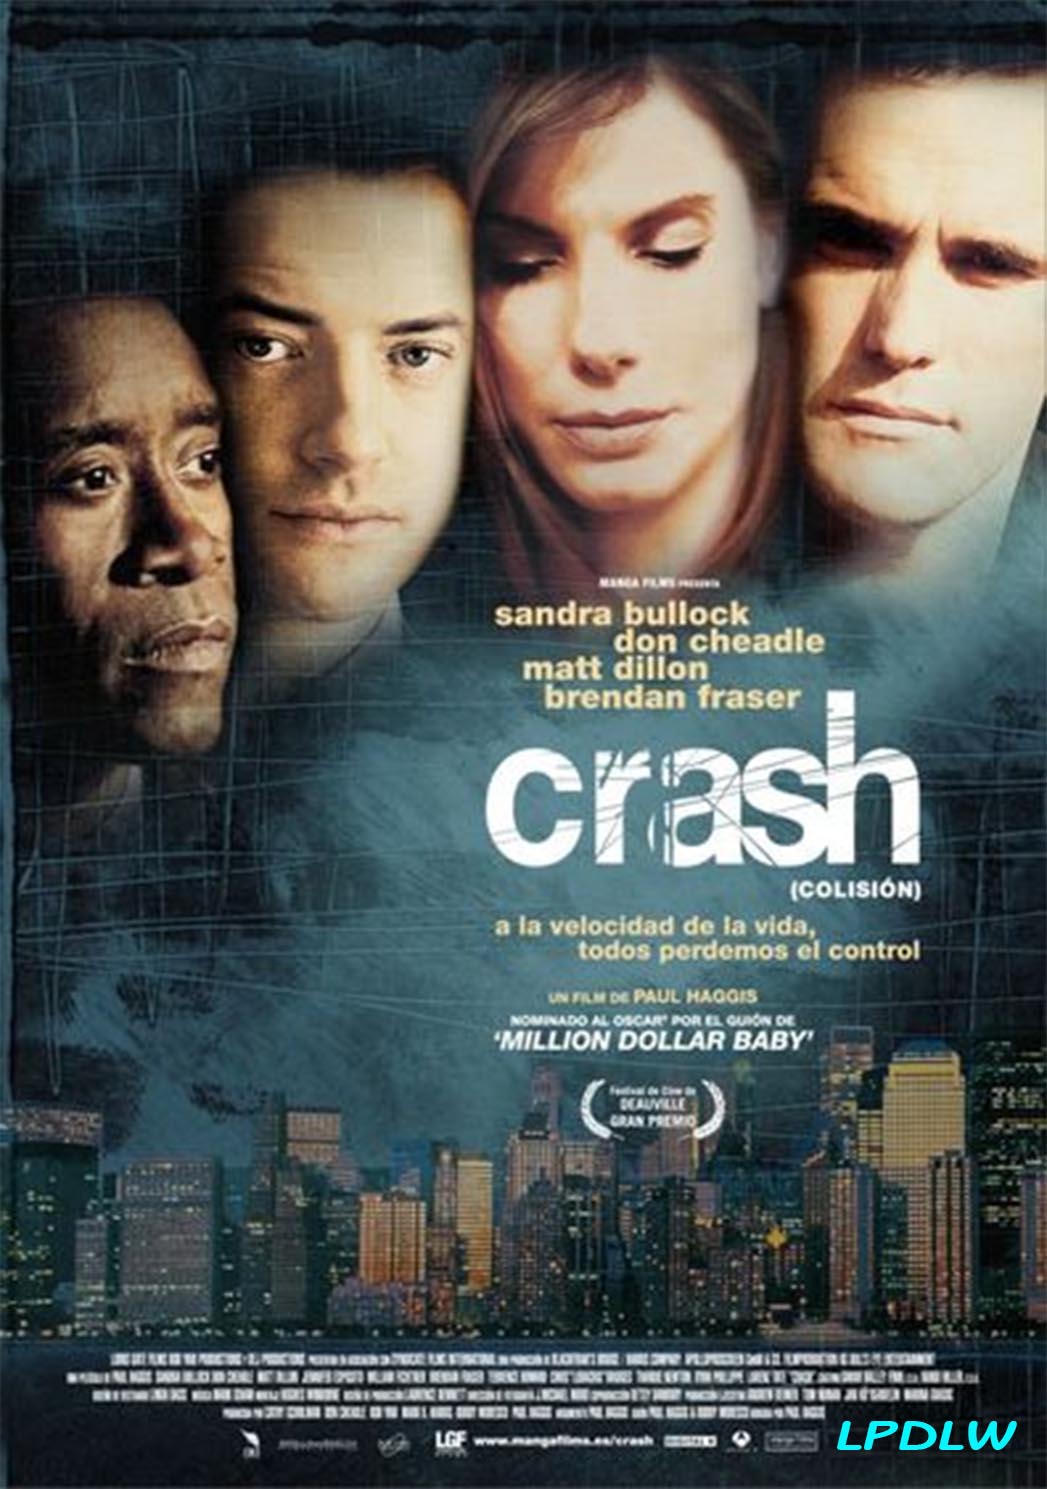 Vidas Cruzadas / Colisión (Crash - 2004)